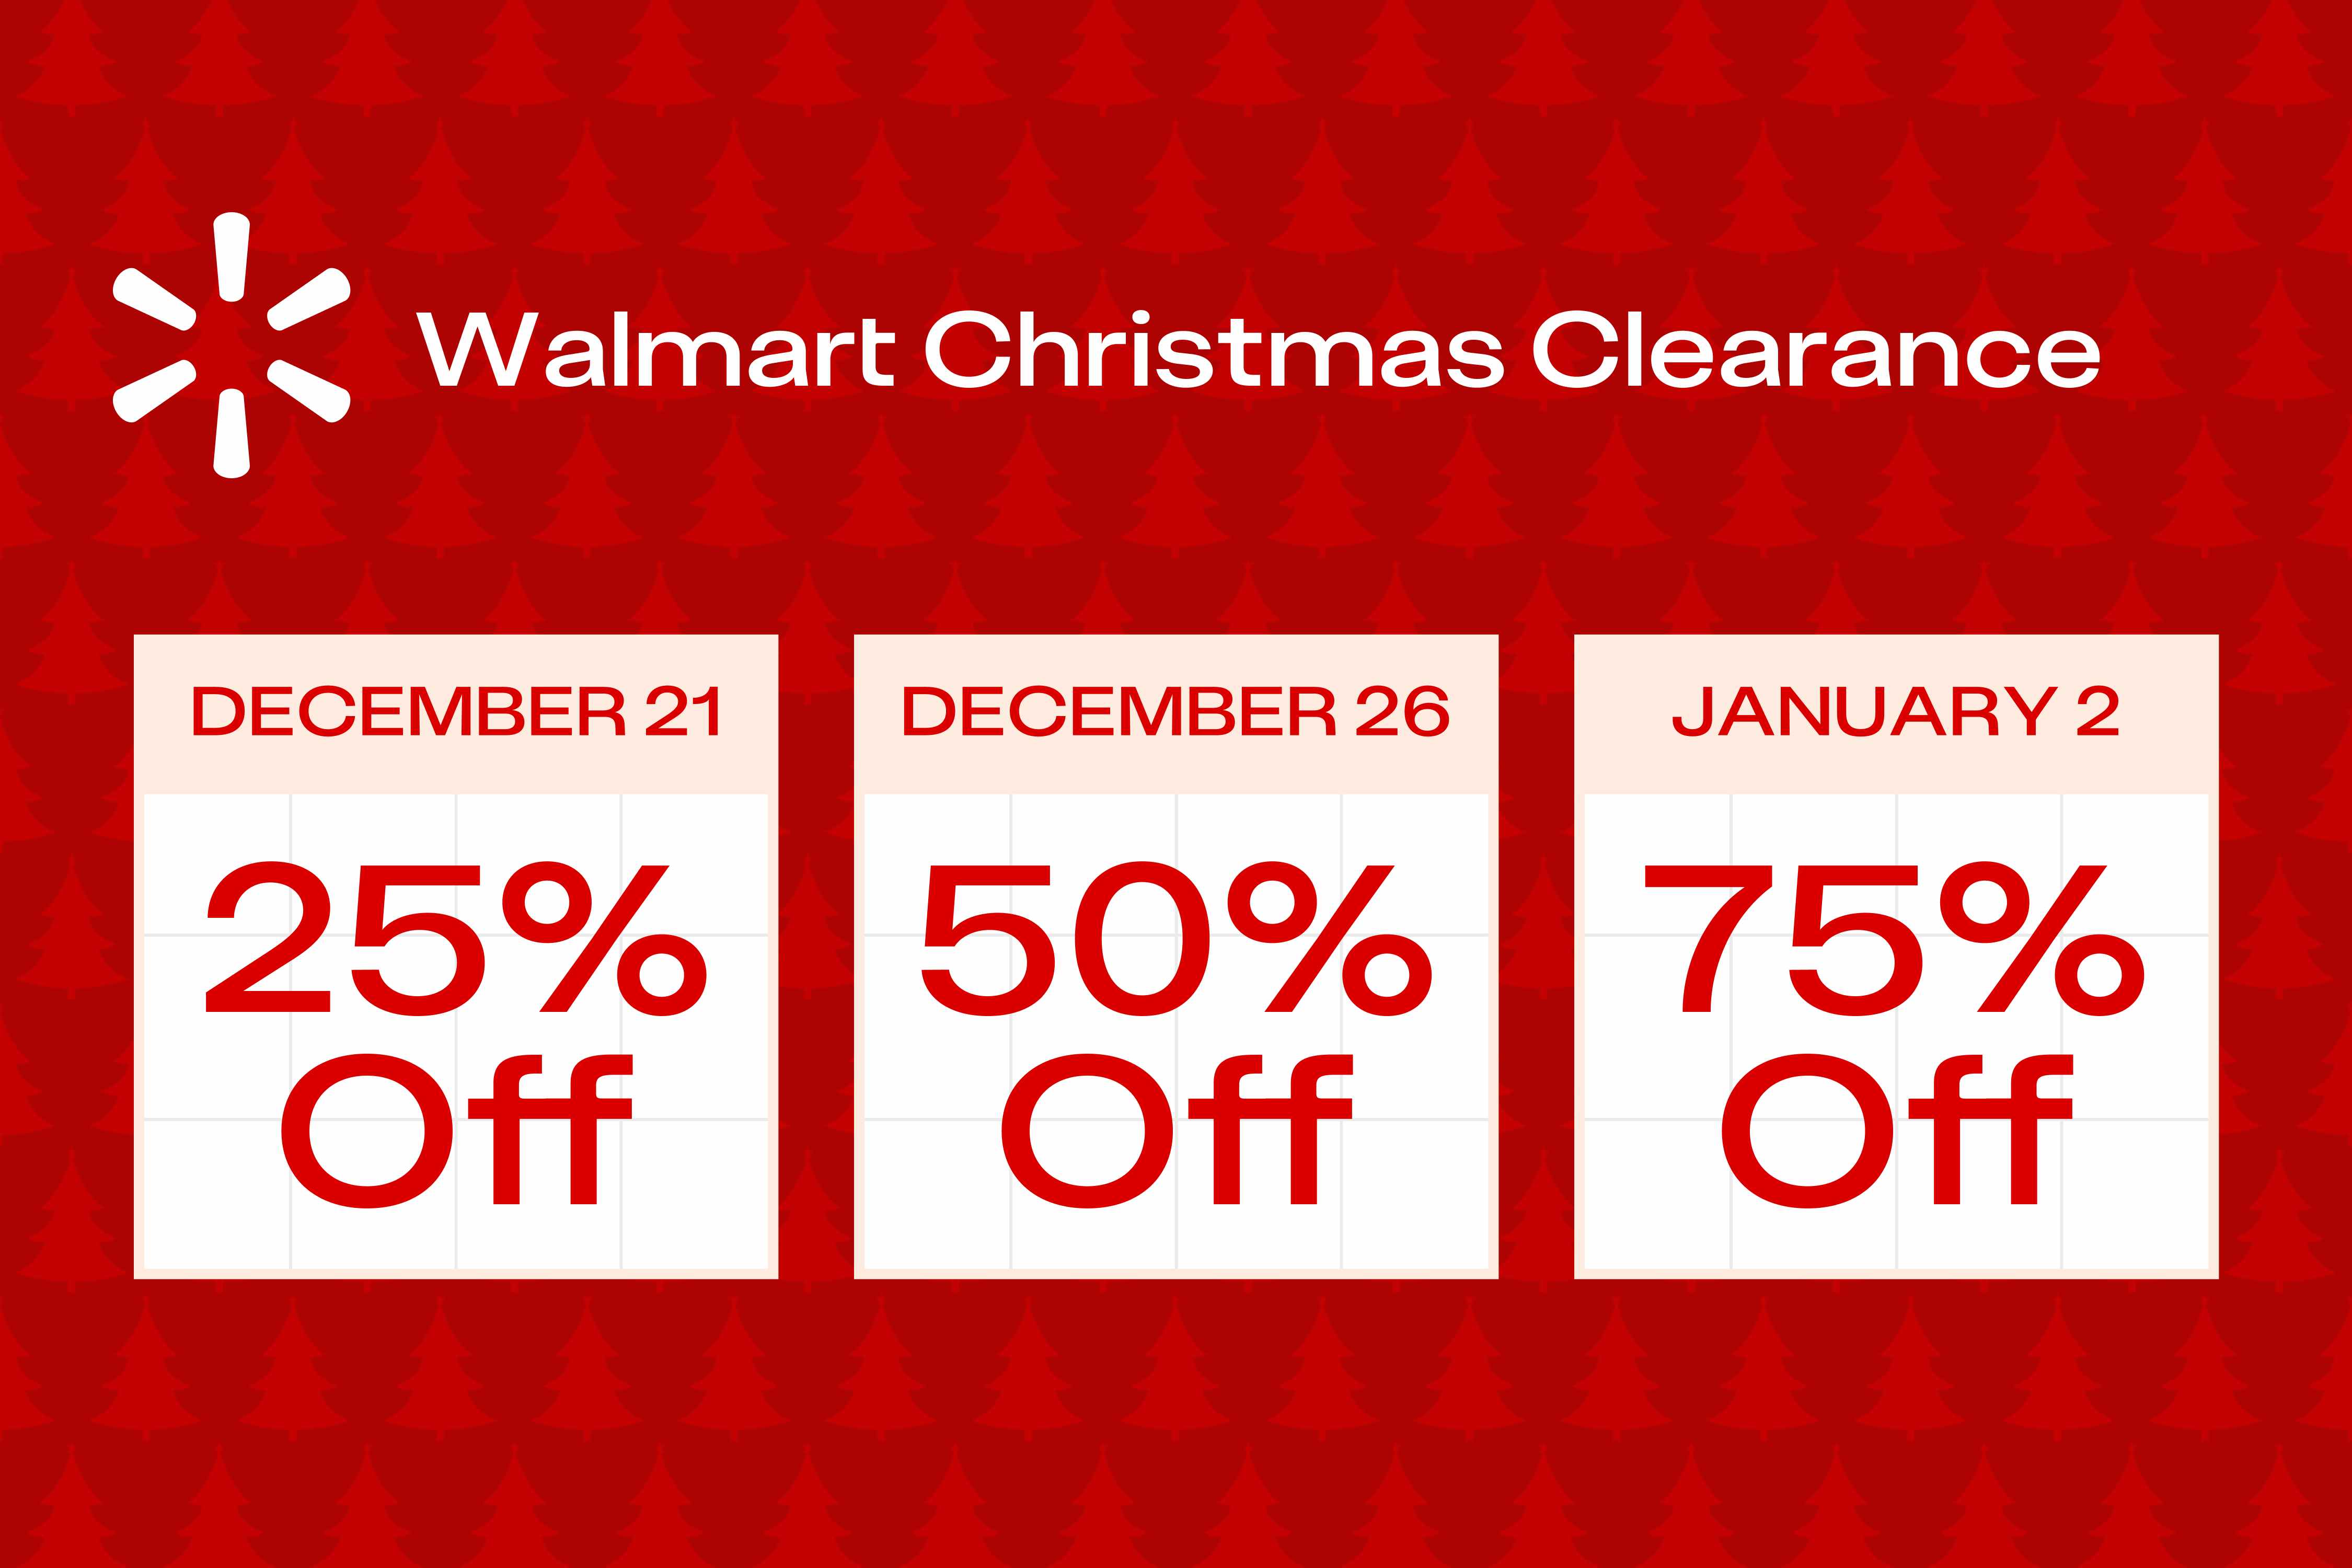 Walmart Christmas Clearance